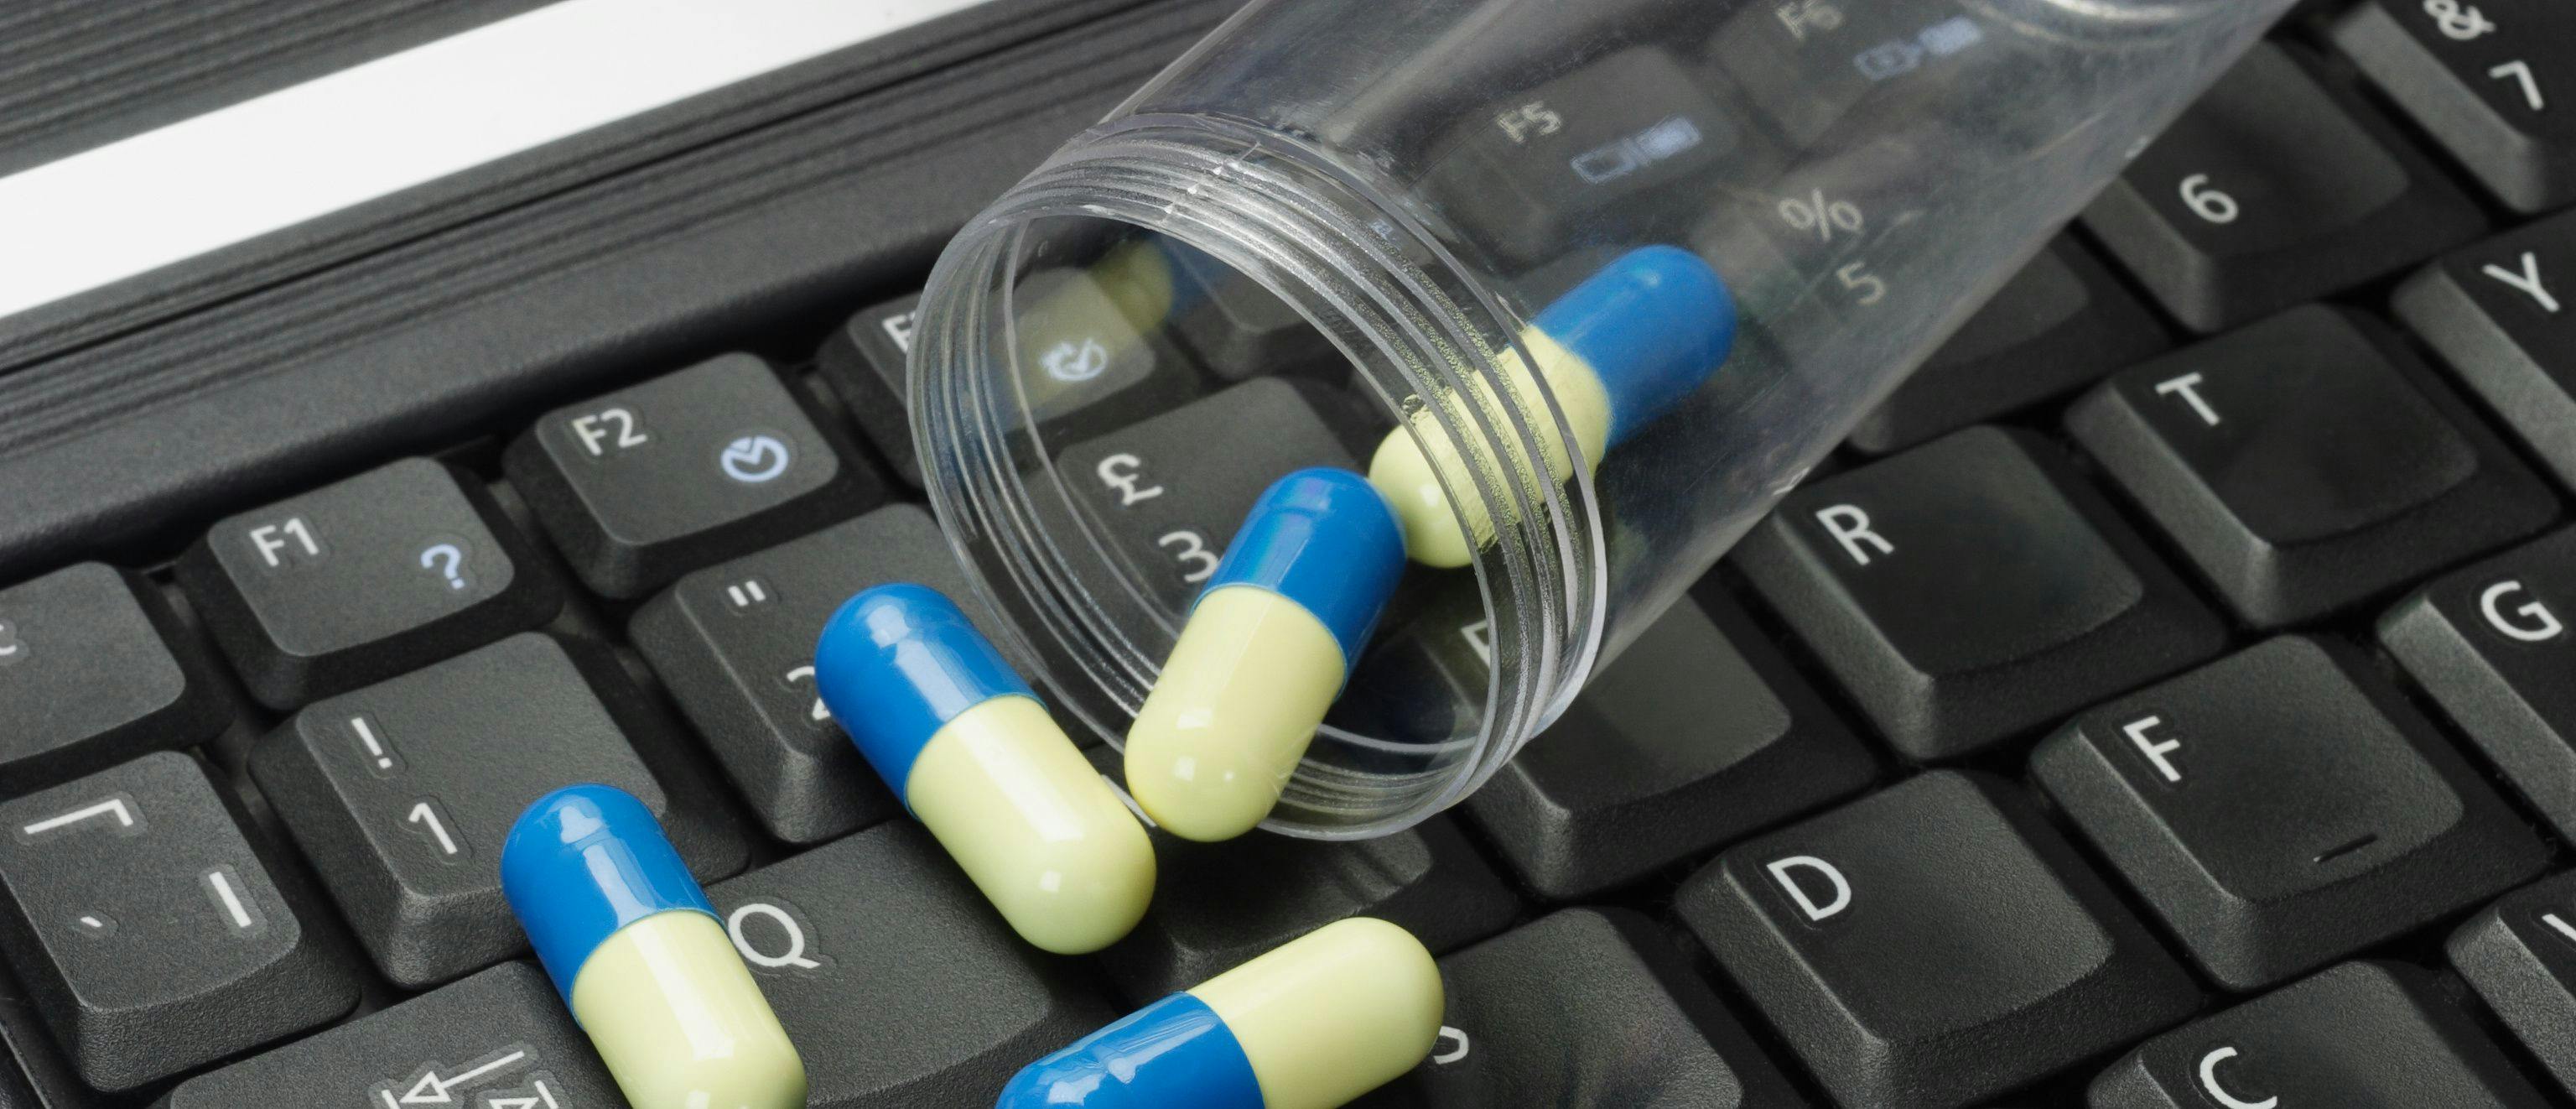 Illegal Pharmacy Websites Admonished by FDA